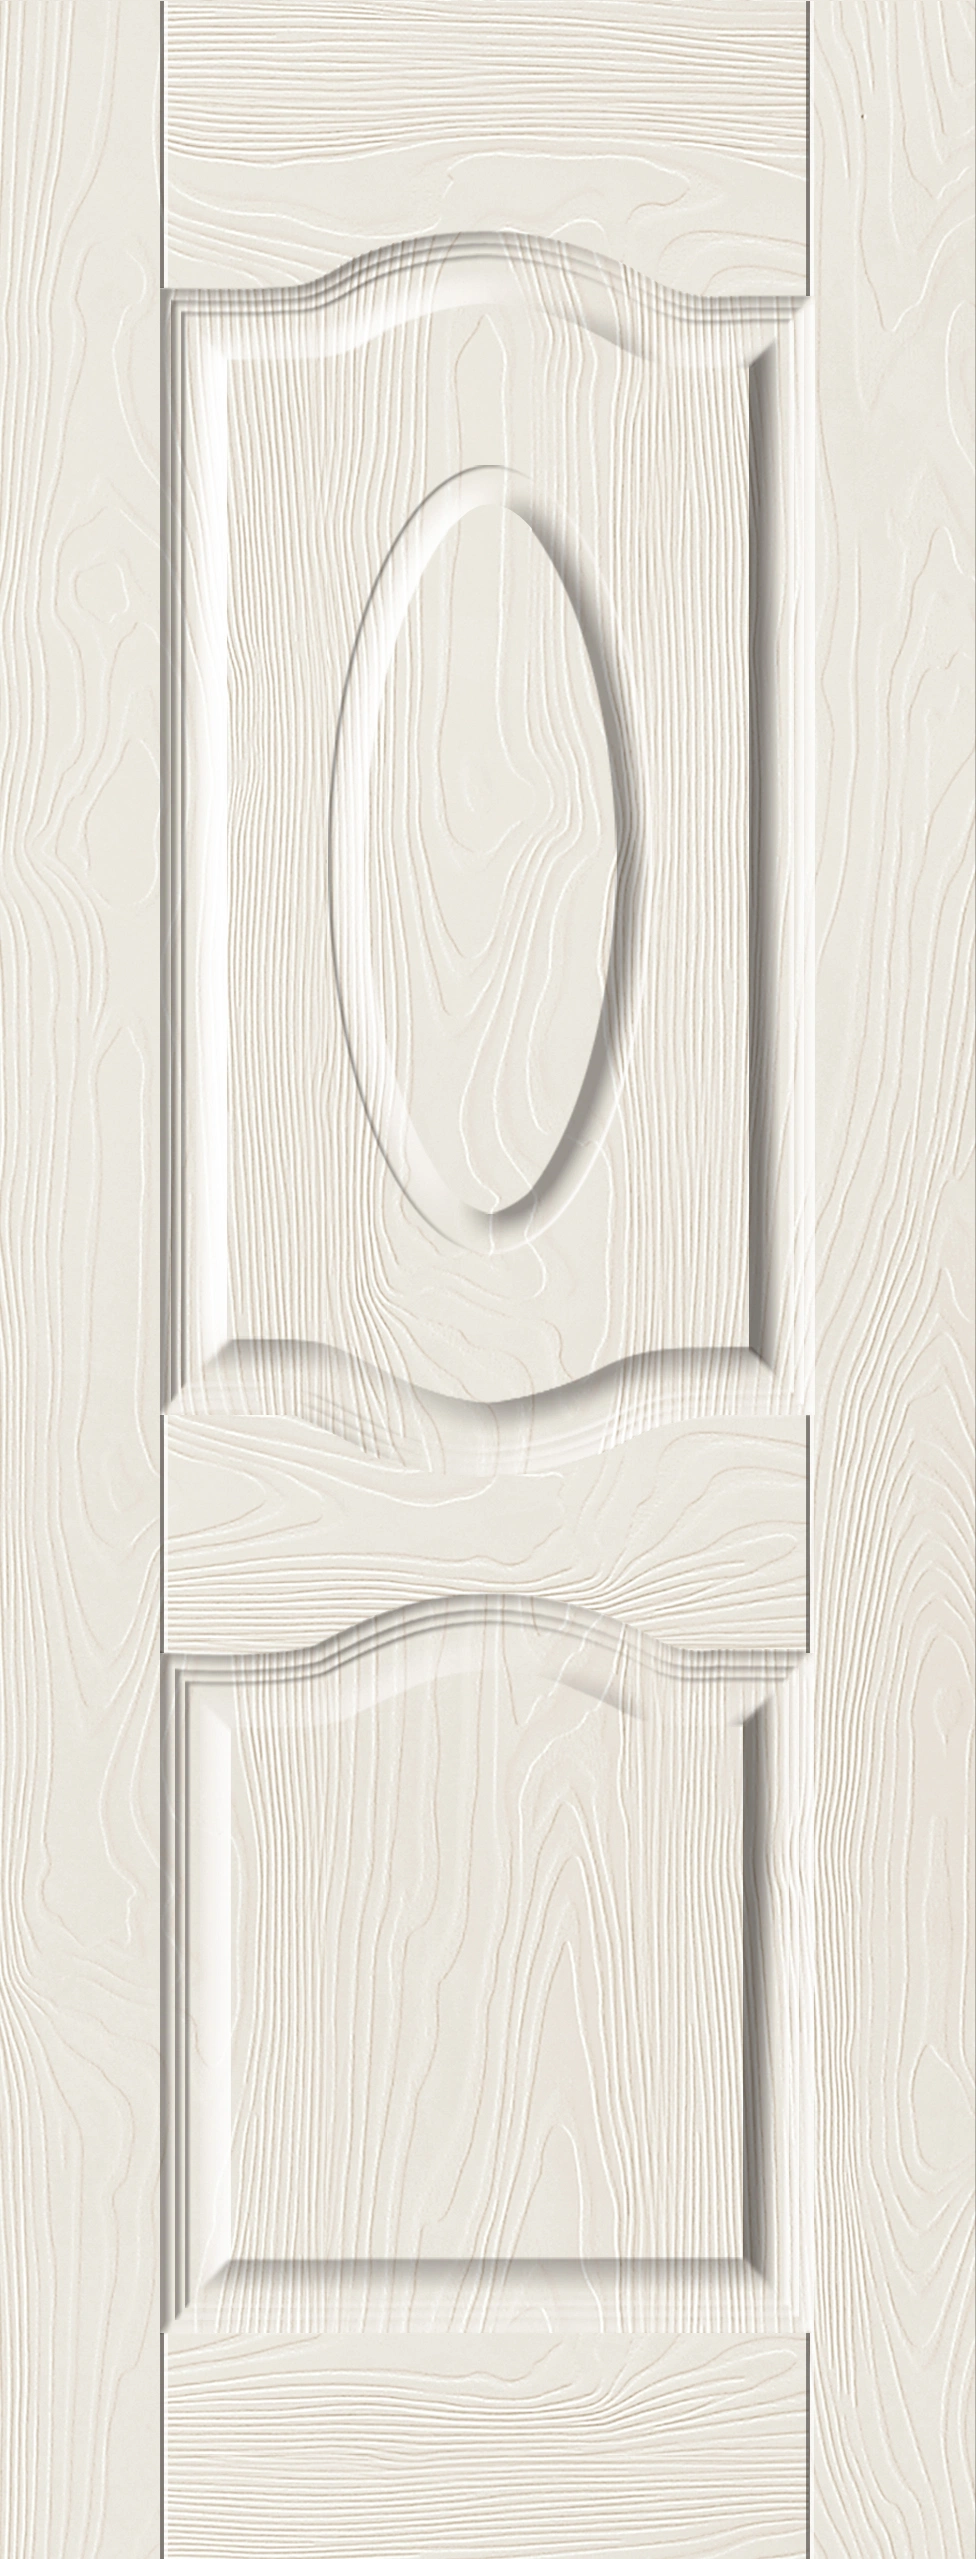 Home Decoration Warm White Carved Primer Door Skin Panel for Interior